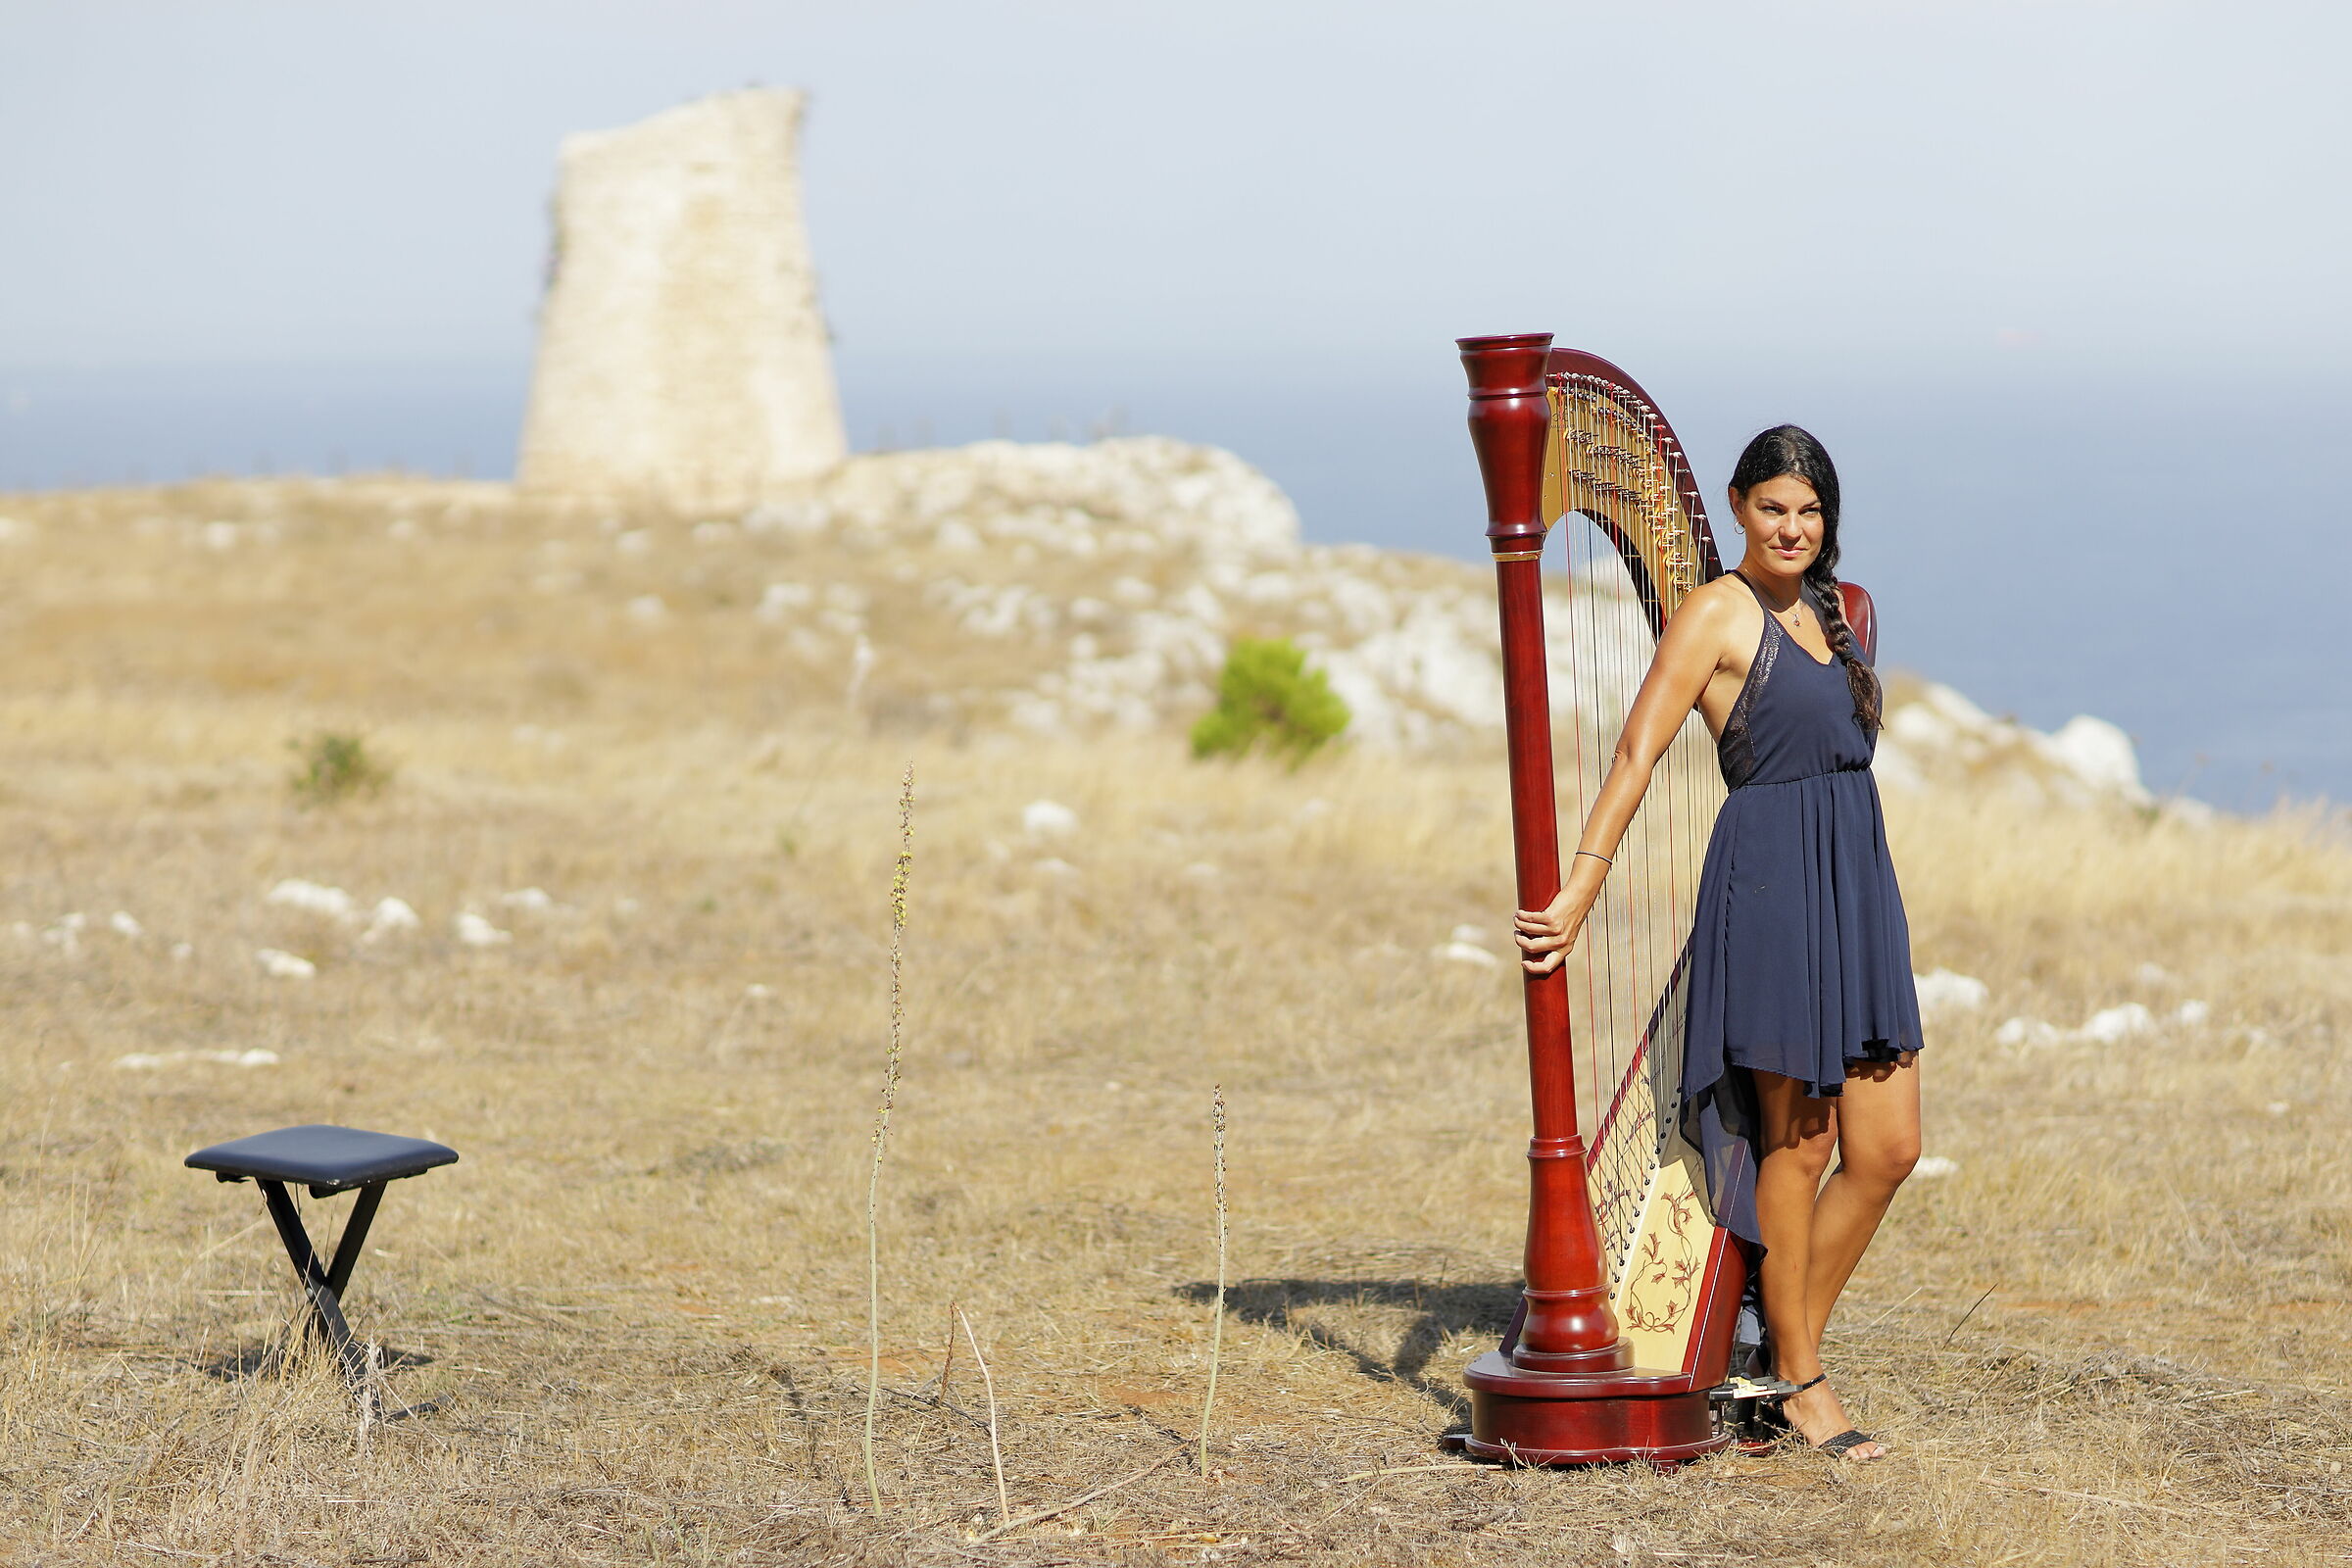 Angela and her harp...